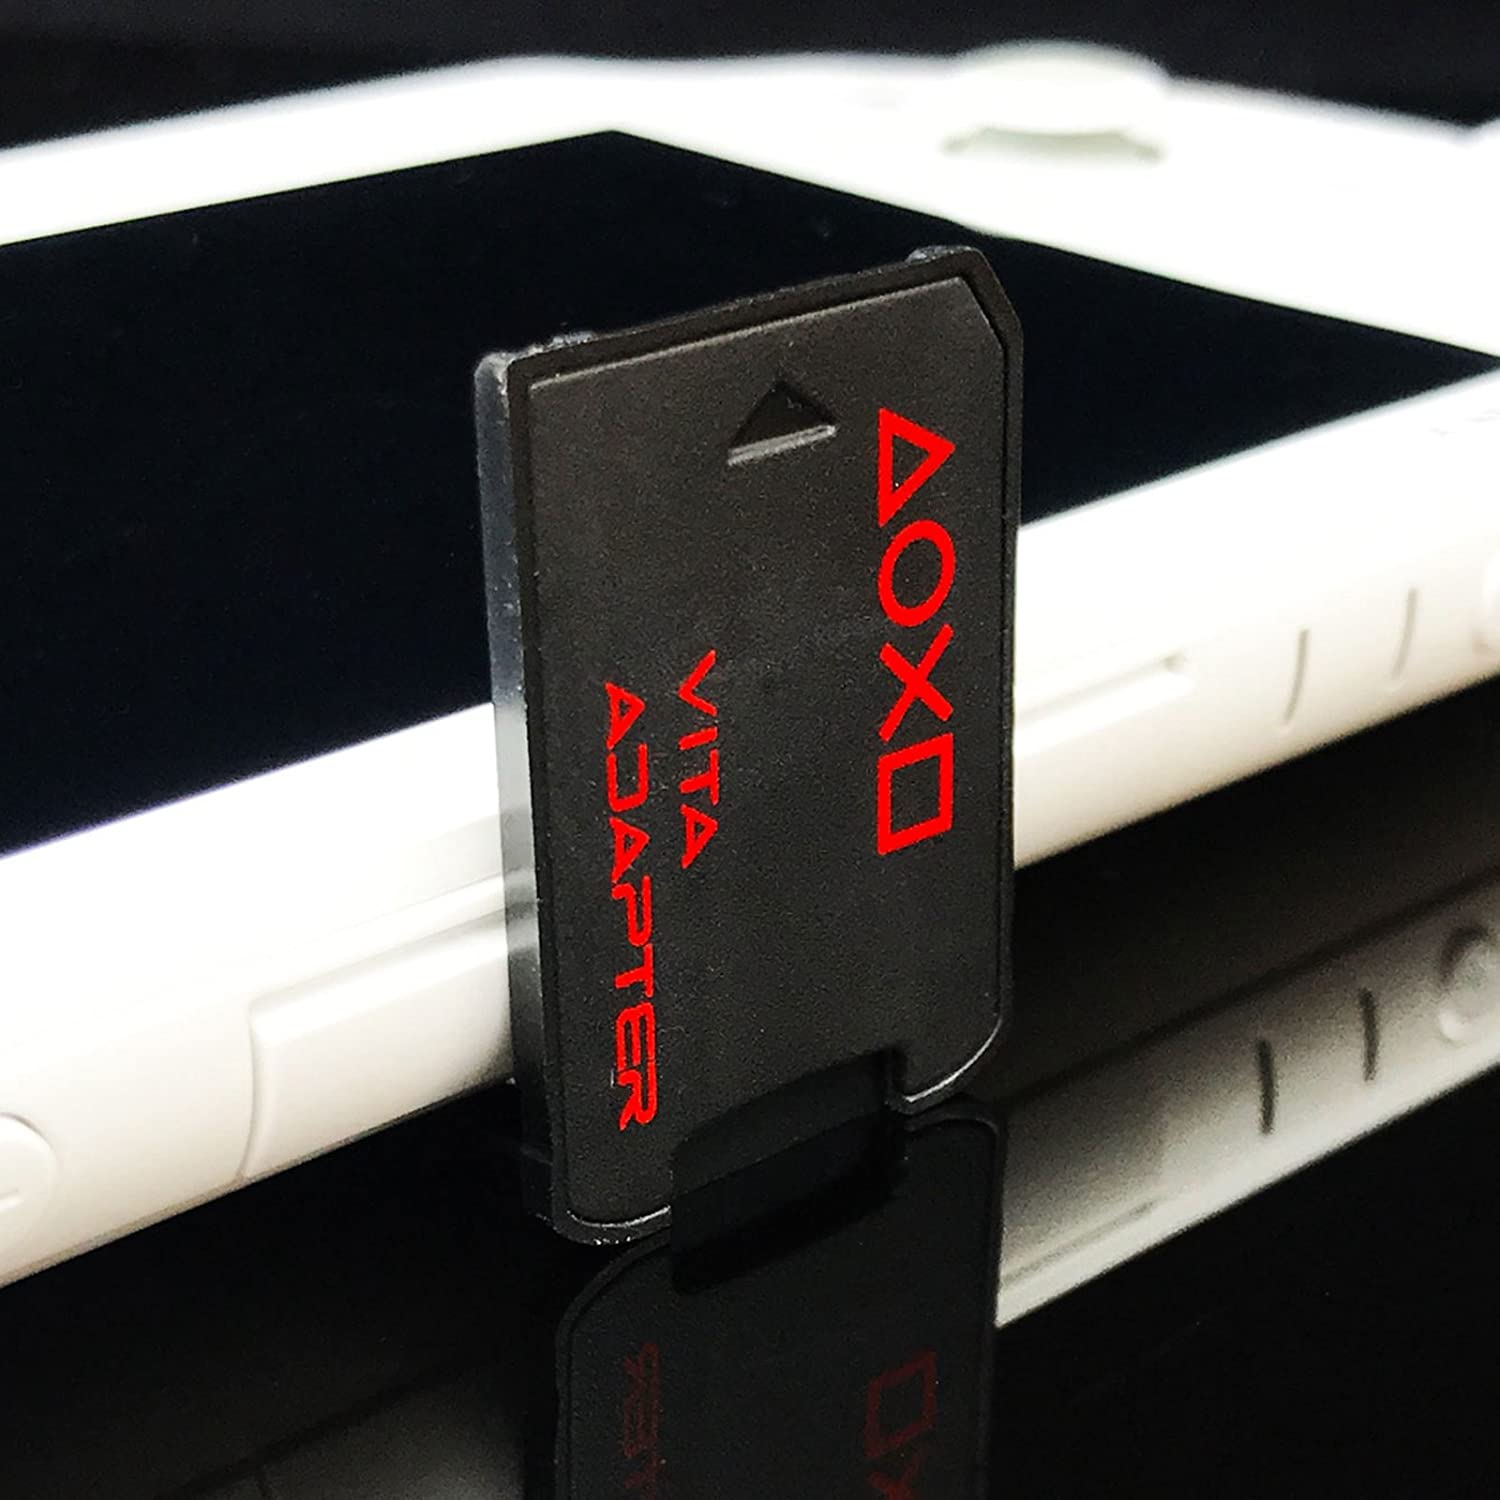 PS Vita 【 変換メモリーカード１枚 】microSDカードをVitaのメモリーカードに変換可能 メモリーカード 変換 アダプター